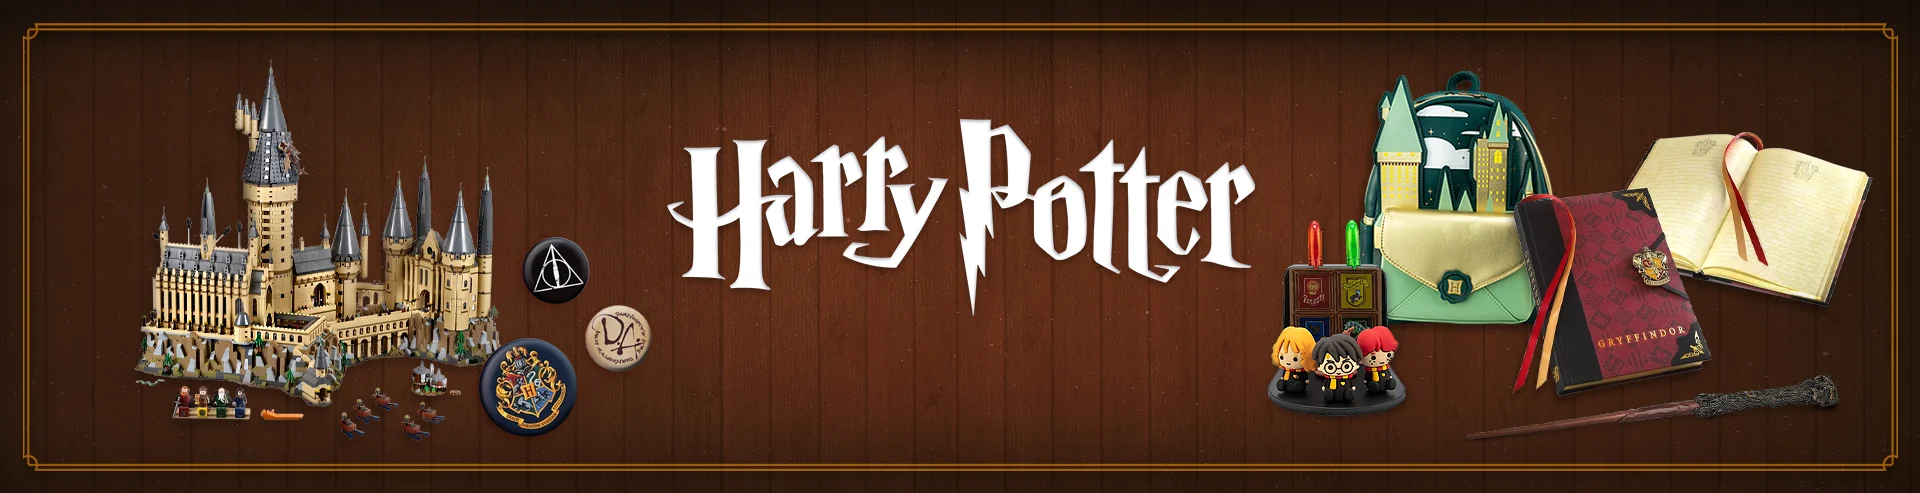 VM-Hero-Harry Potter-SIS-1920x493.webp